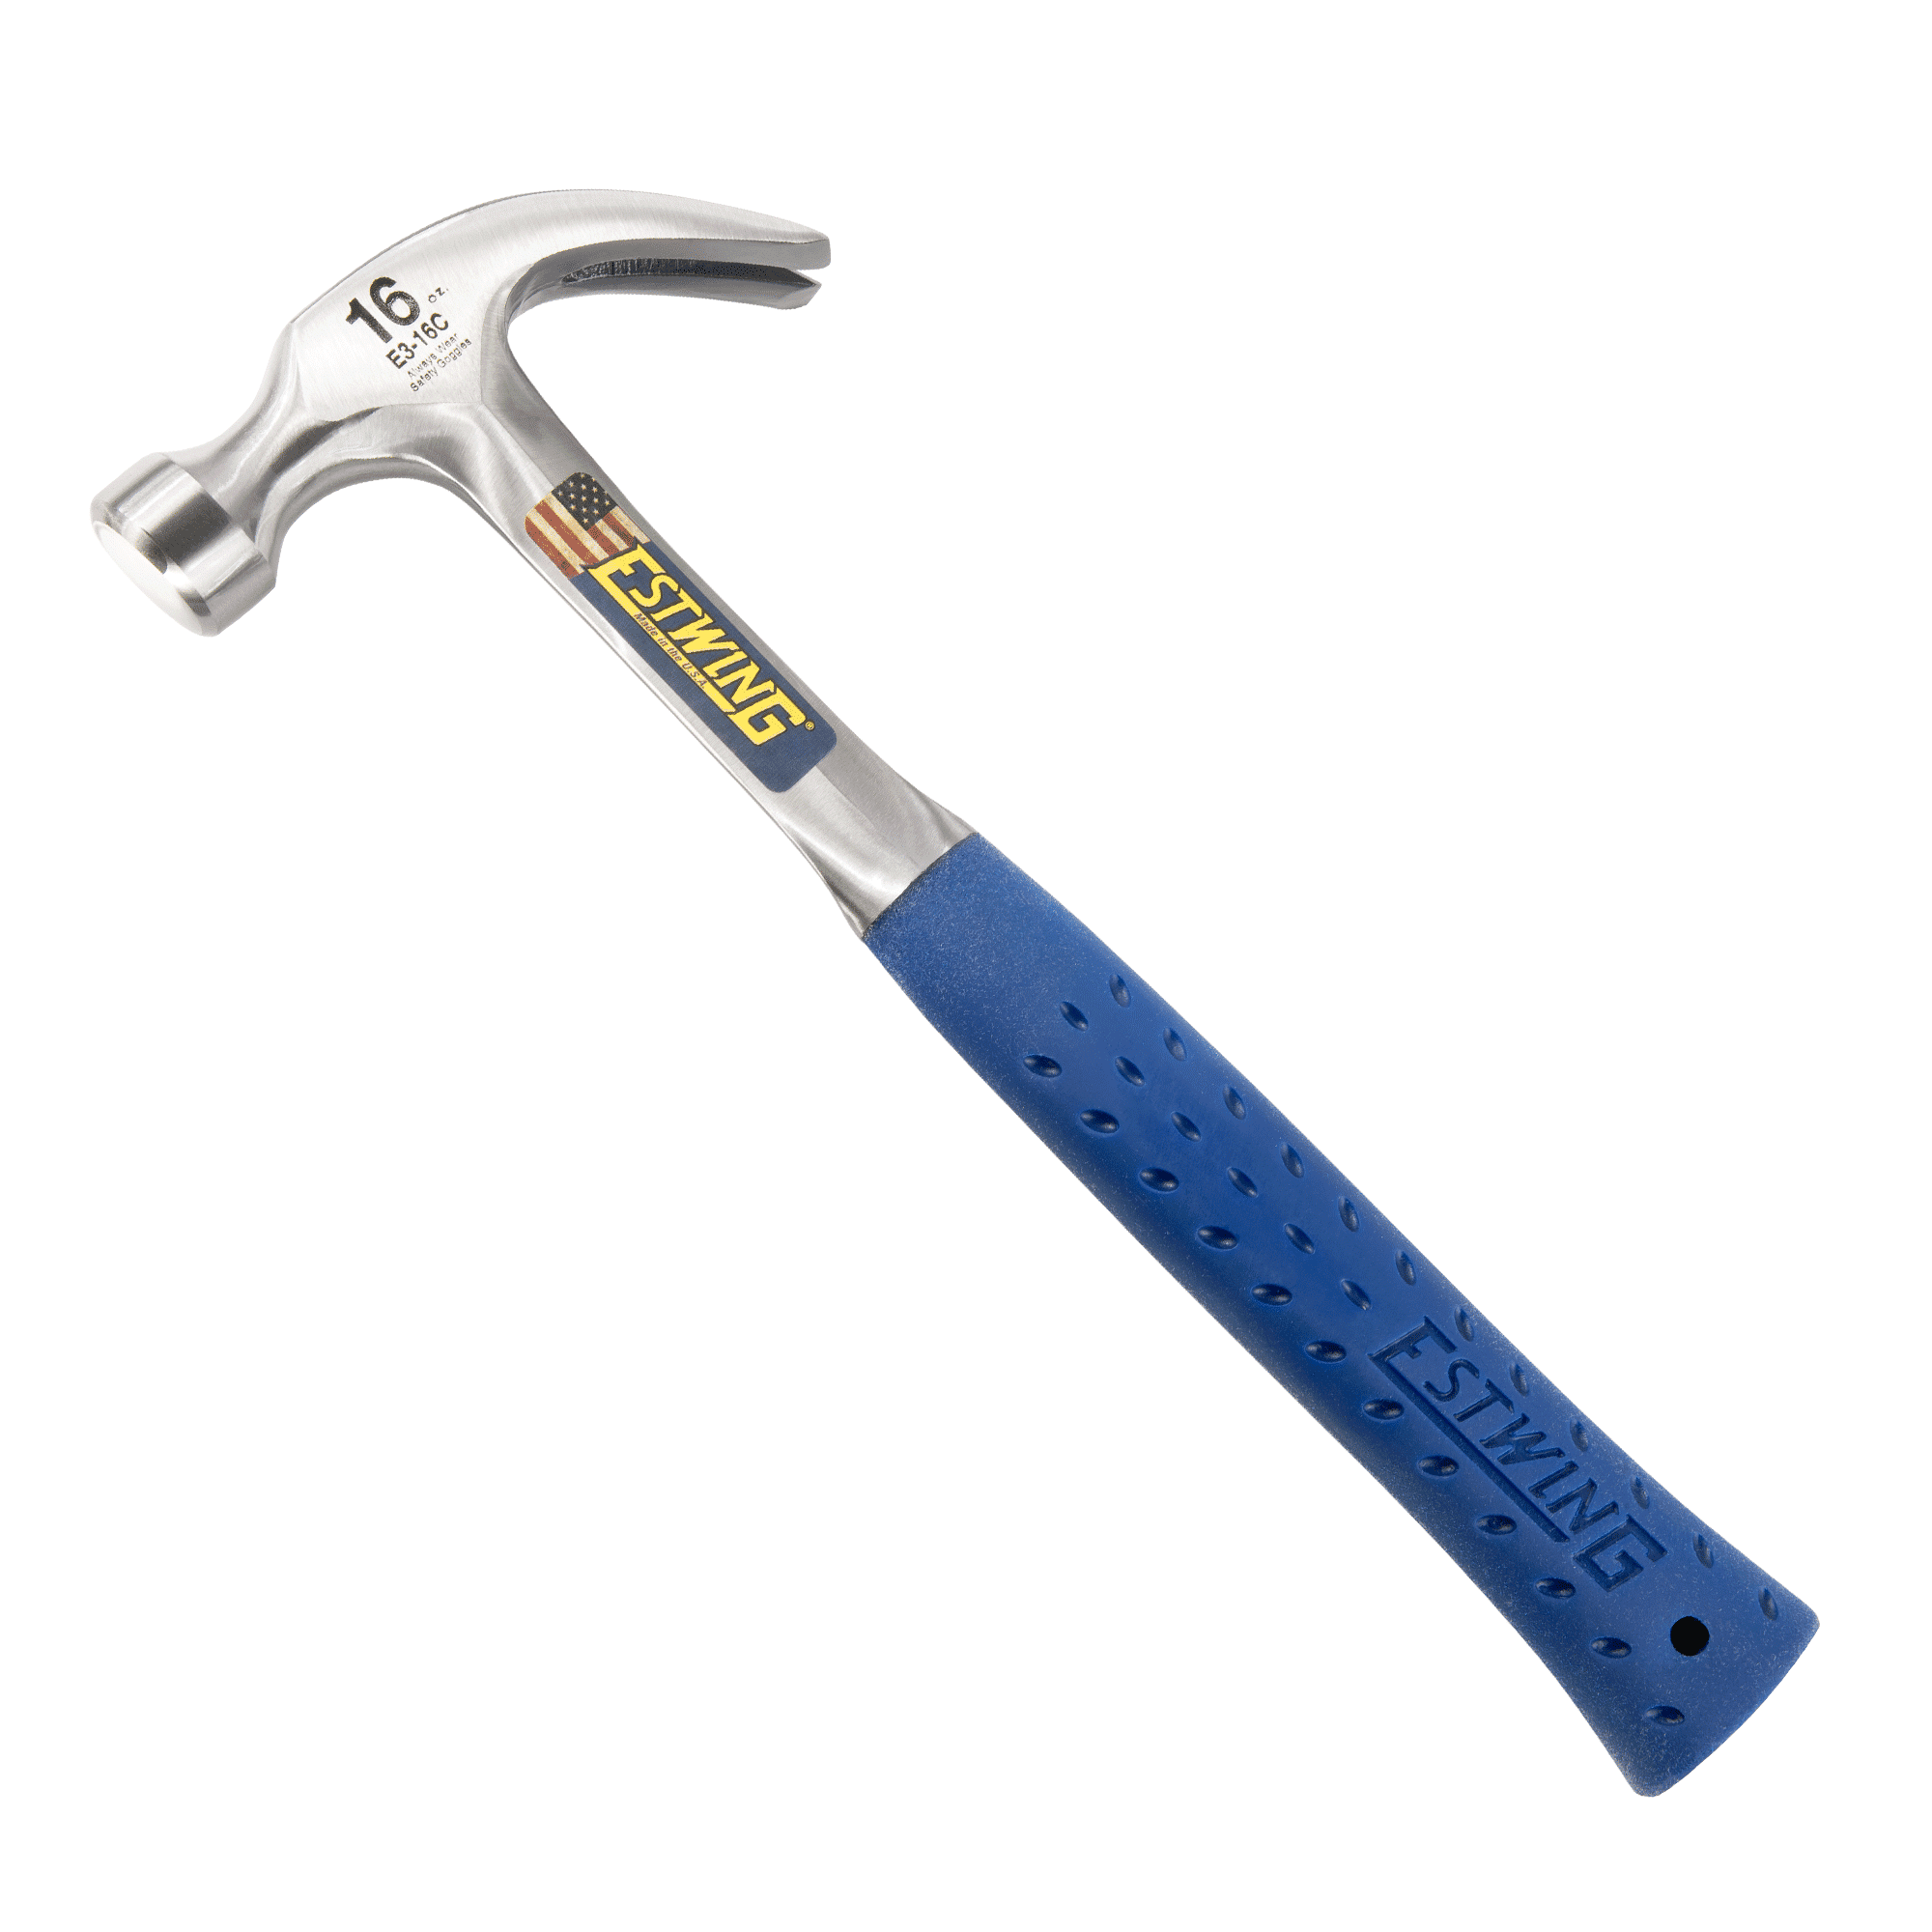 Hammer Small 8 oz